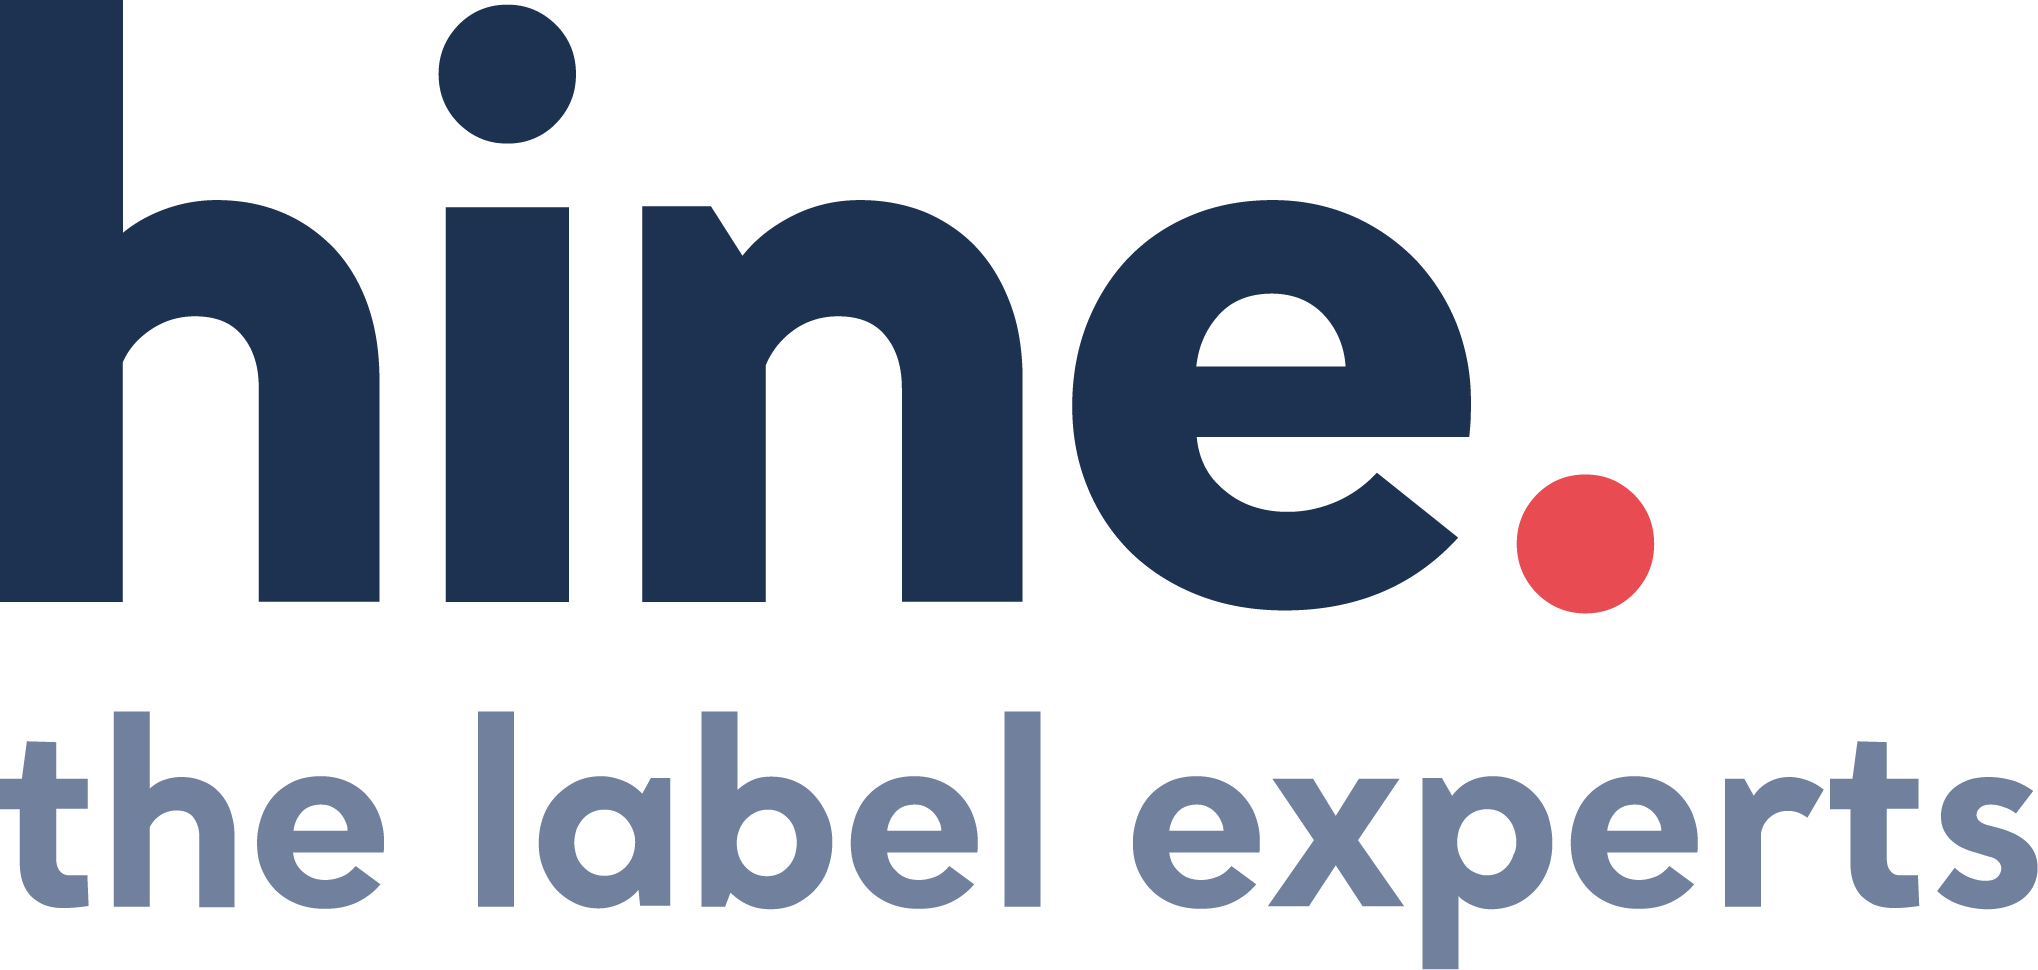 Hine Labels Ltd